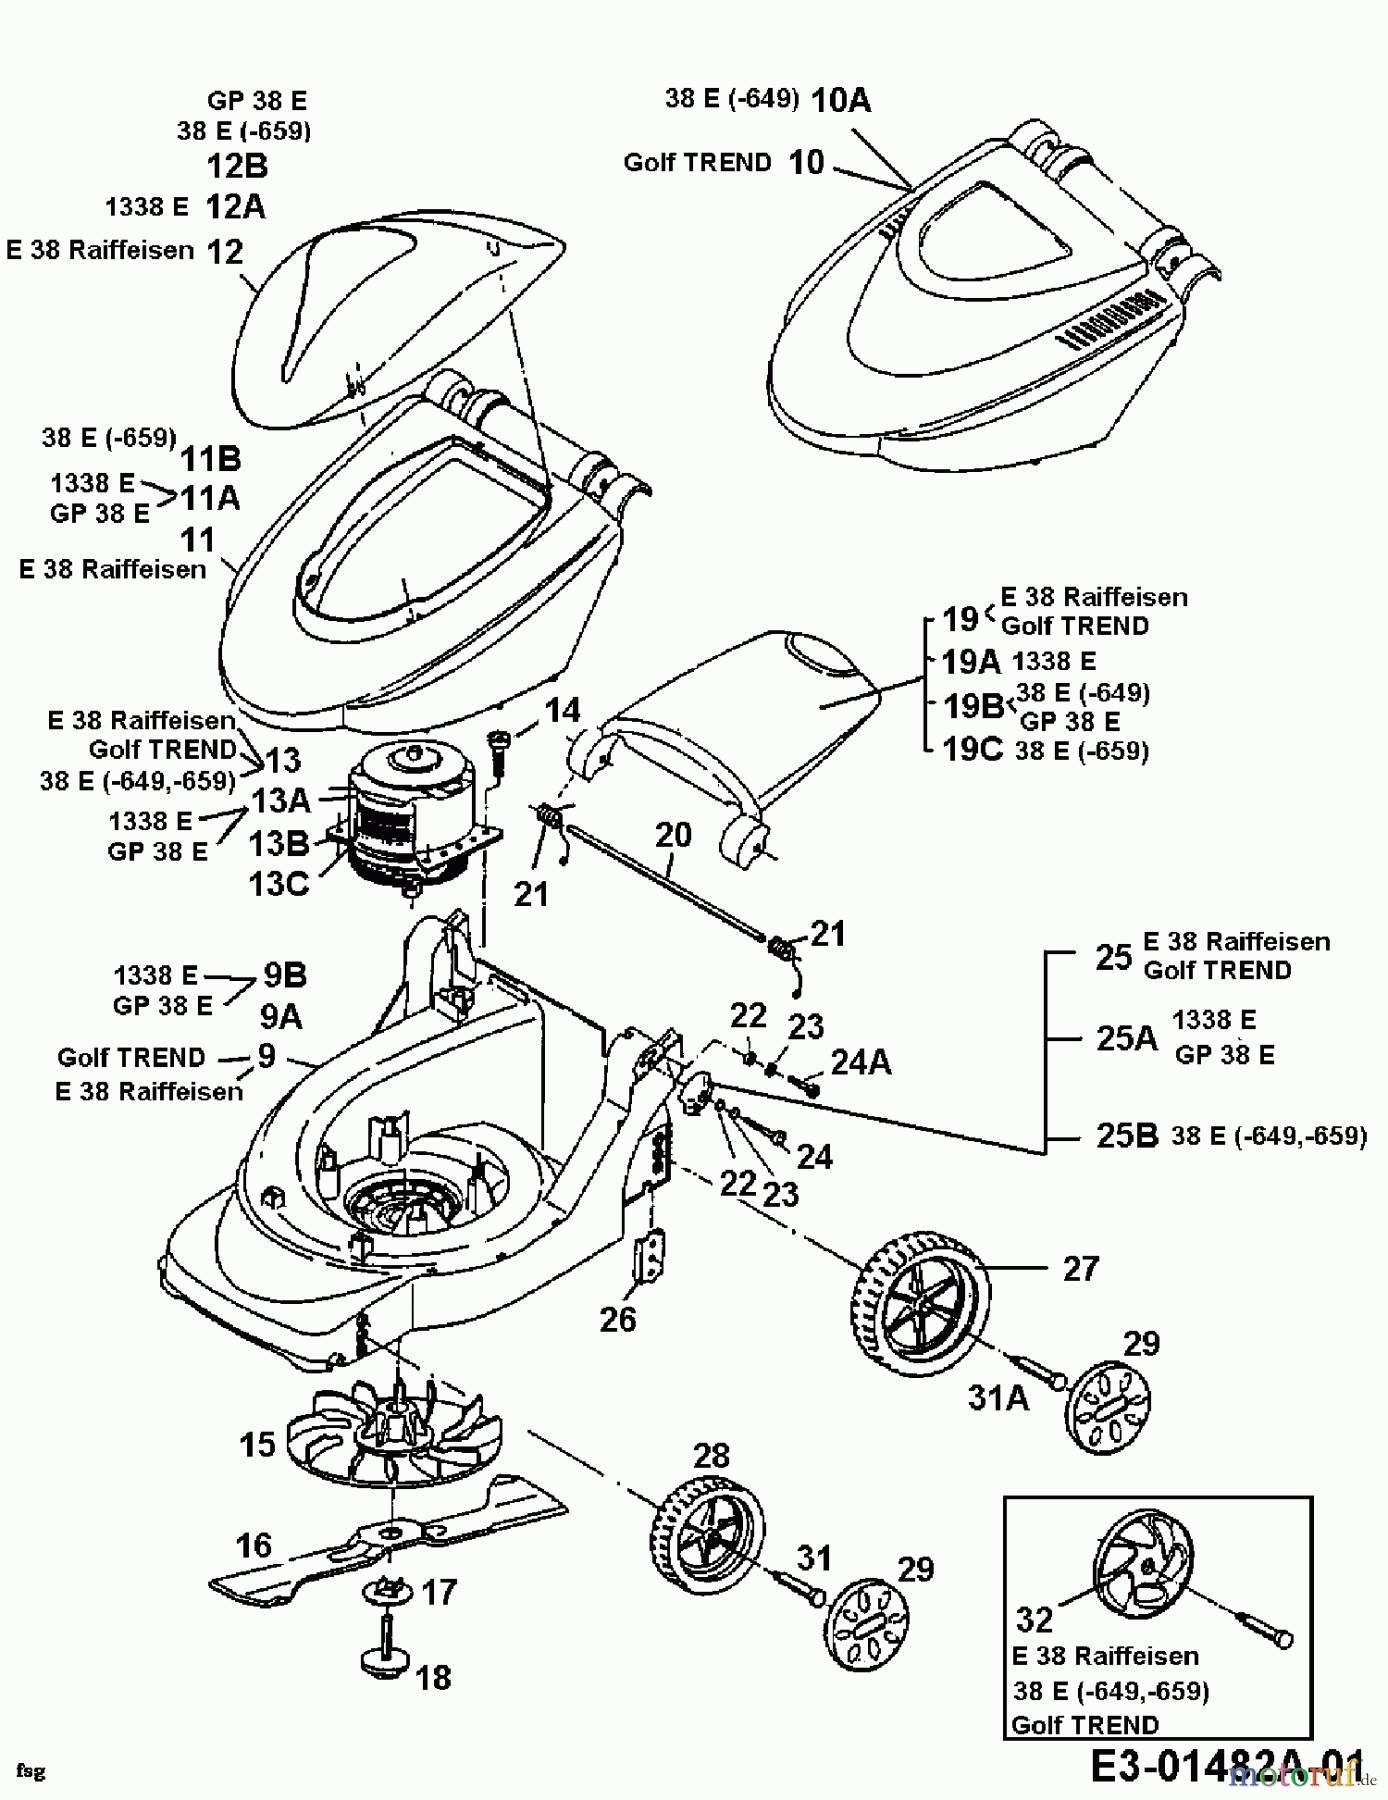  Topflite Elektromäher 38 E 18A-G0E-649  (2000) Grundgerät